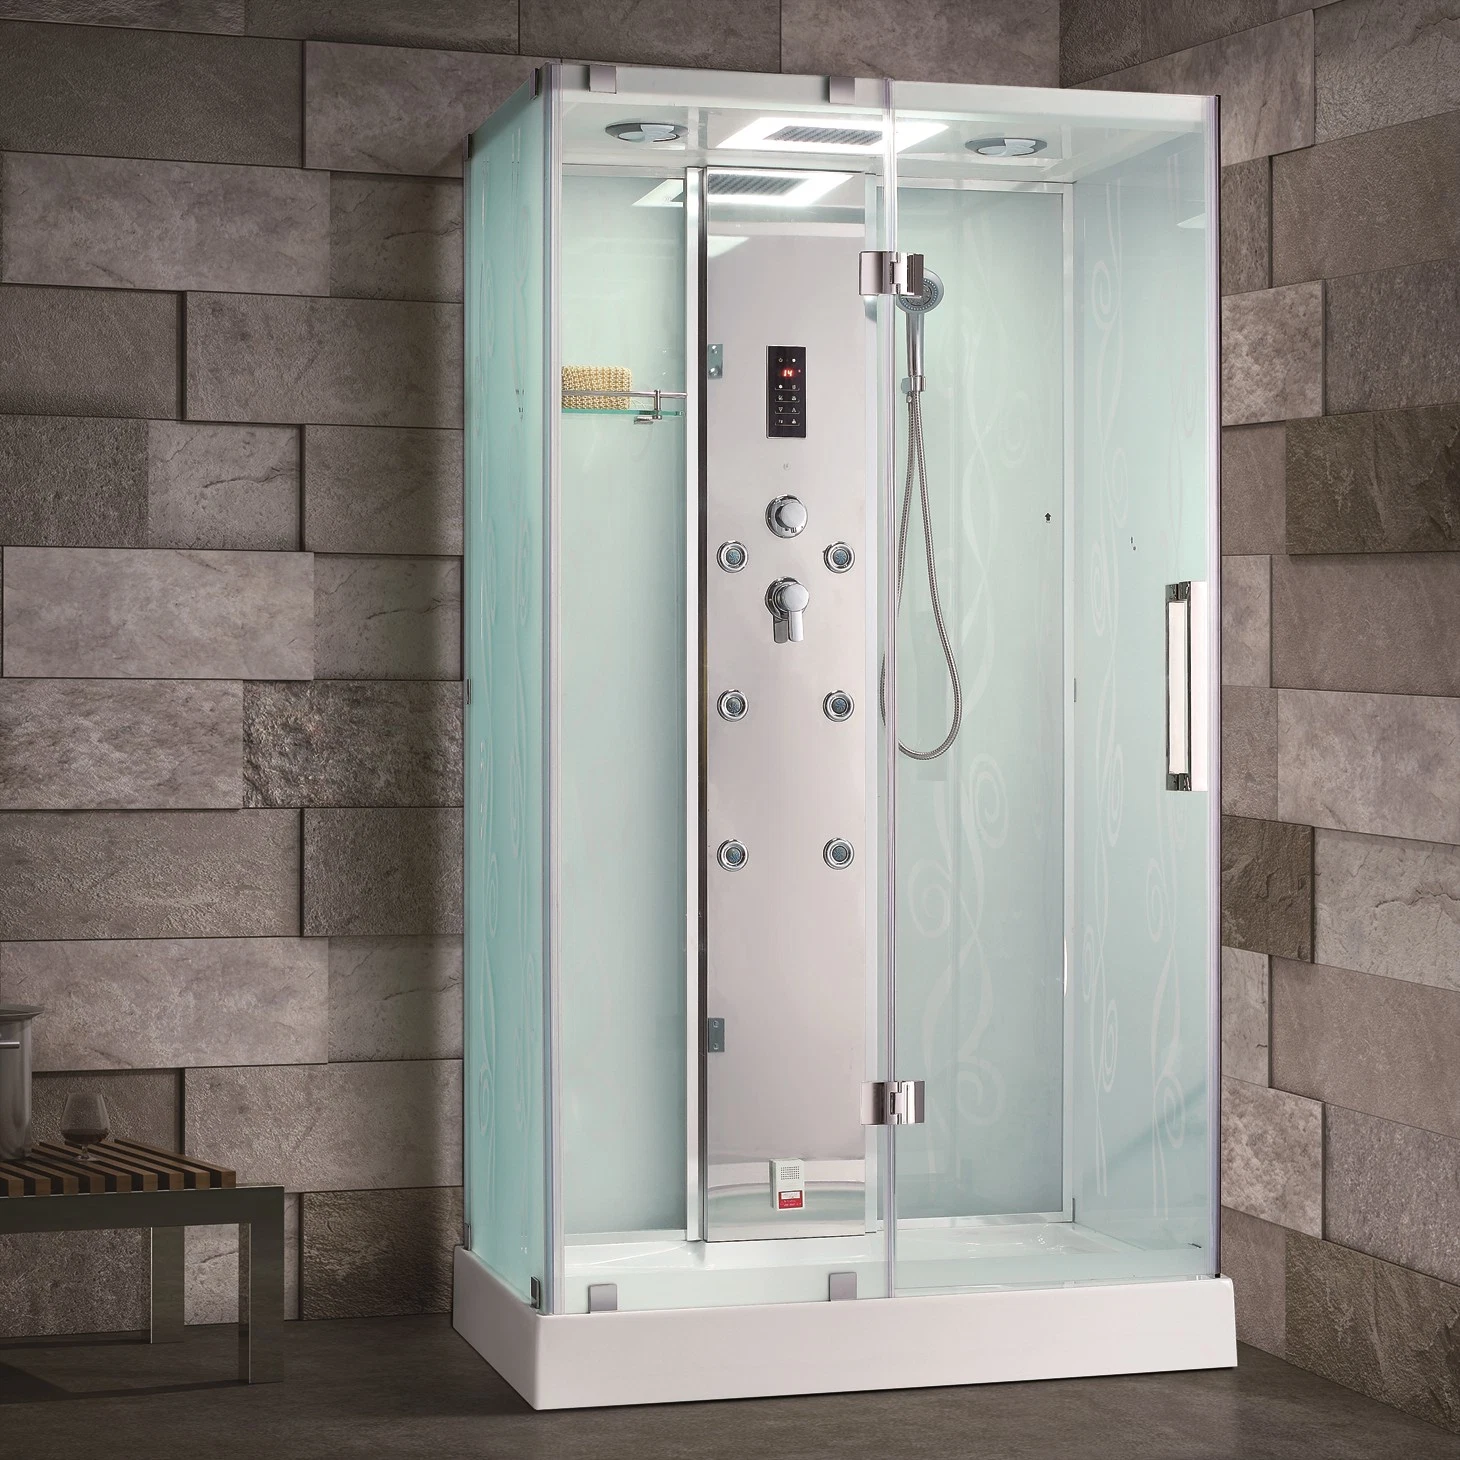 Hotaqi Modern Sauna Bath Home Rectangle Steam Shower Room